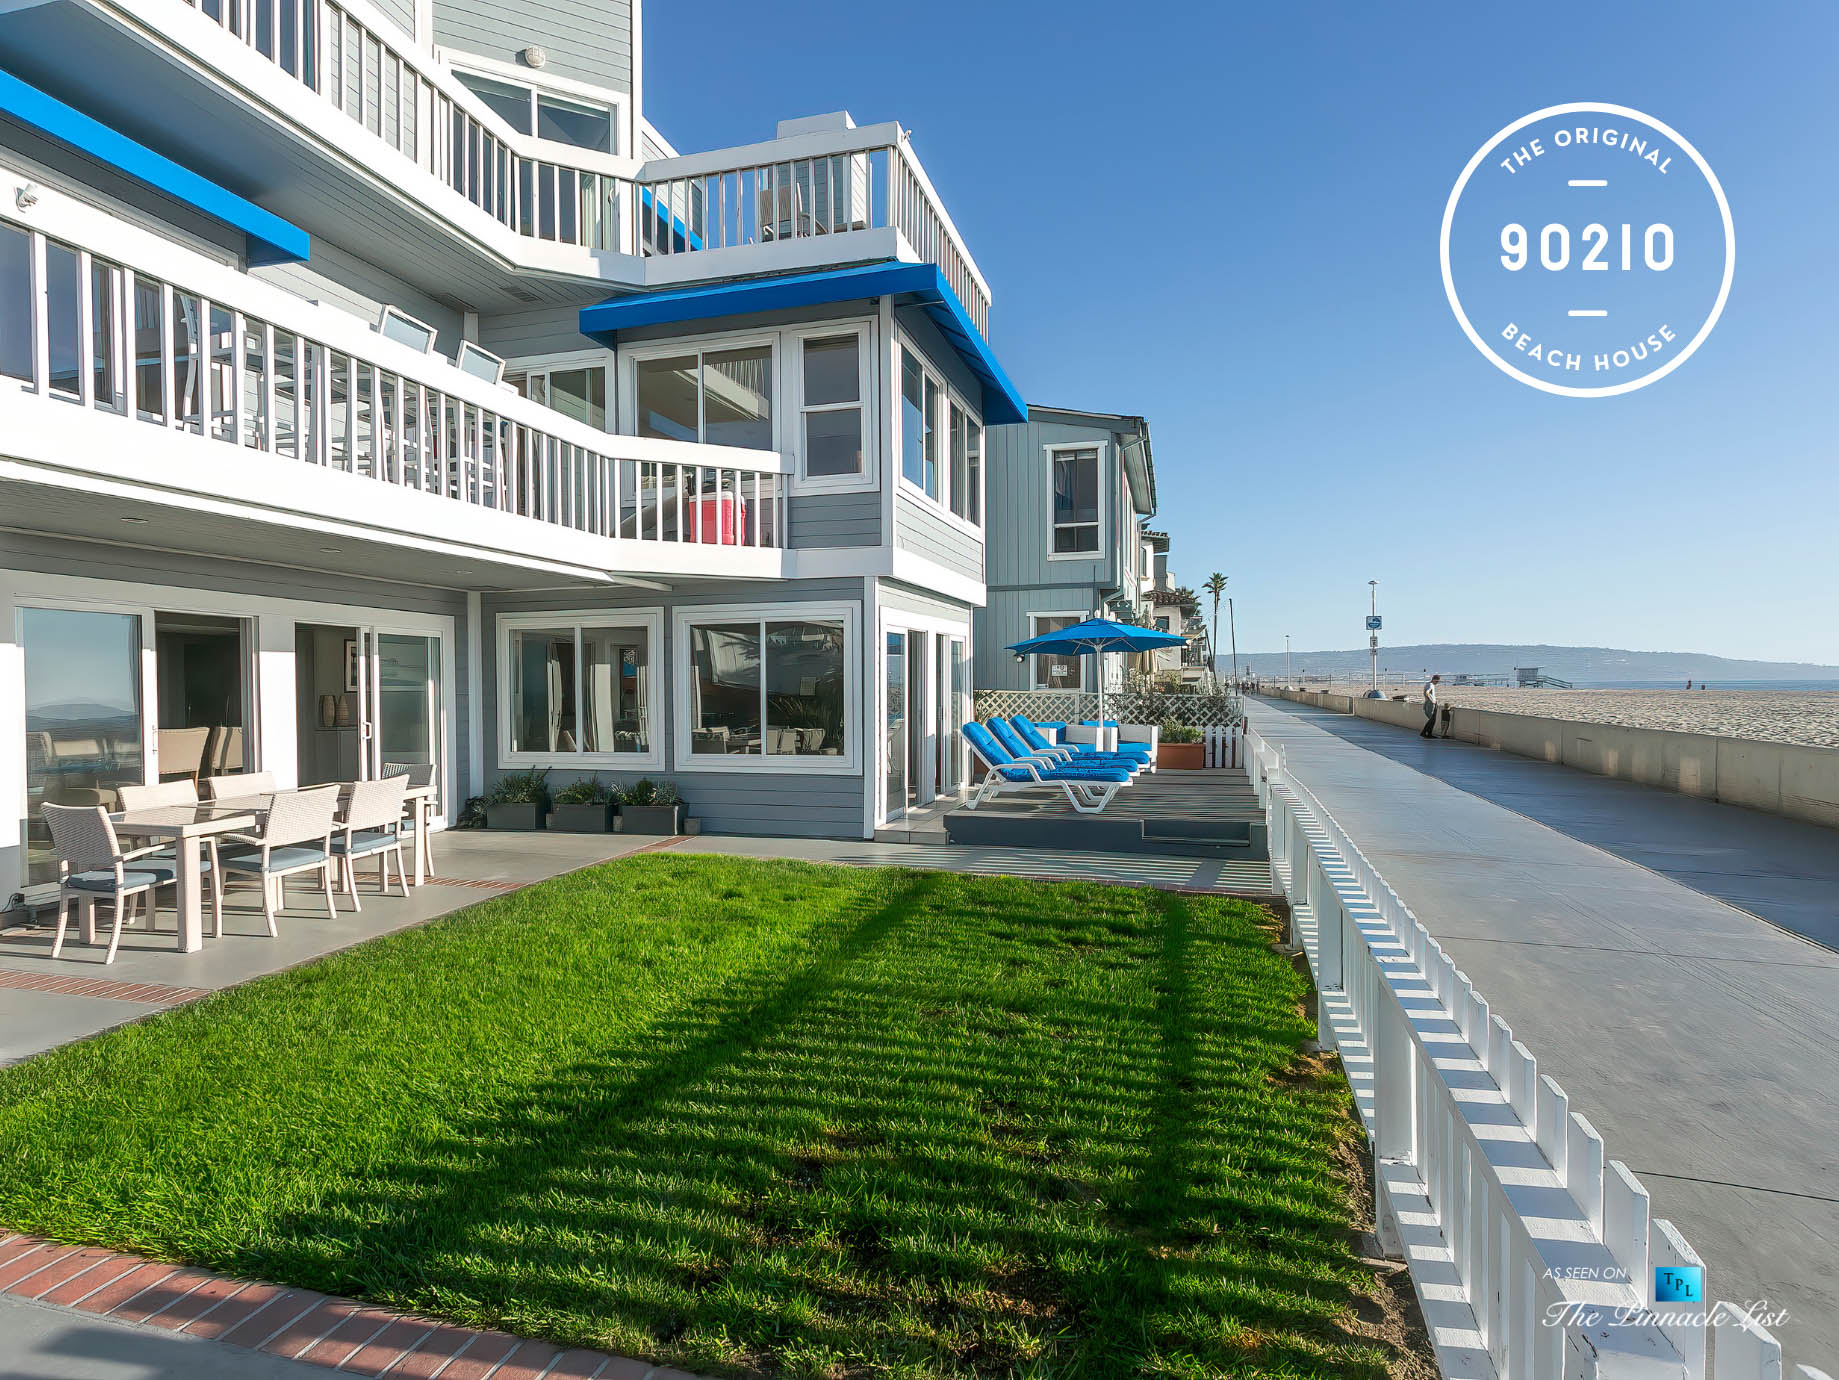 The Original 90210 Beach House - 3500 The Strand, Hermosa Beach, CA, USA - The Strand View